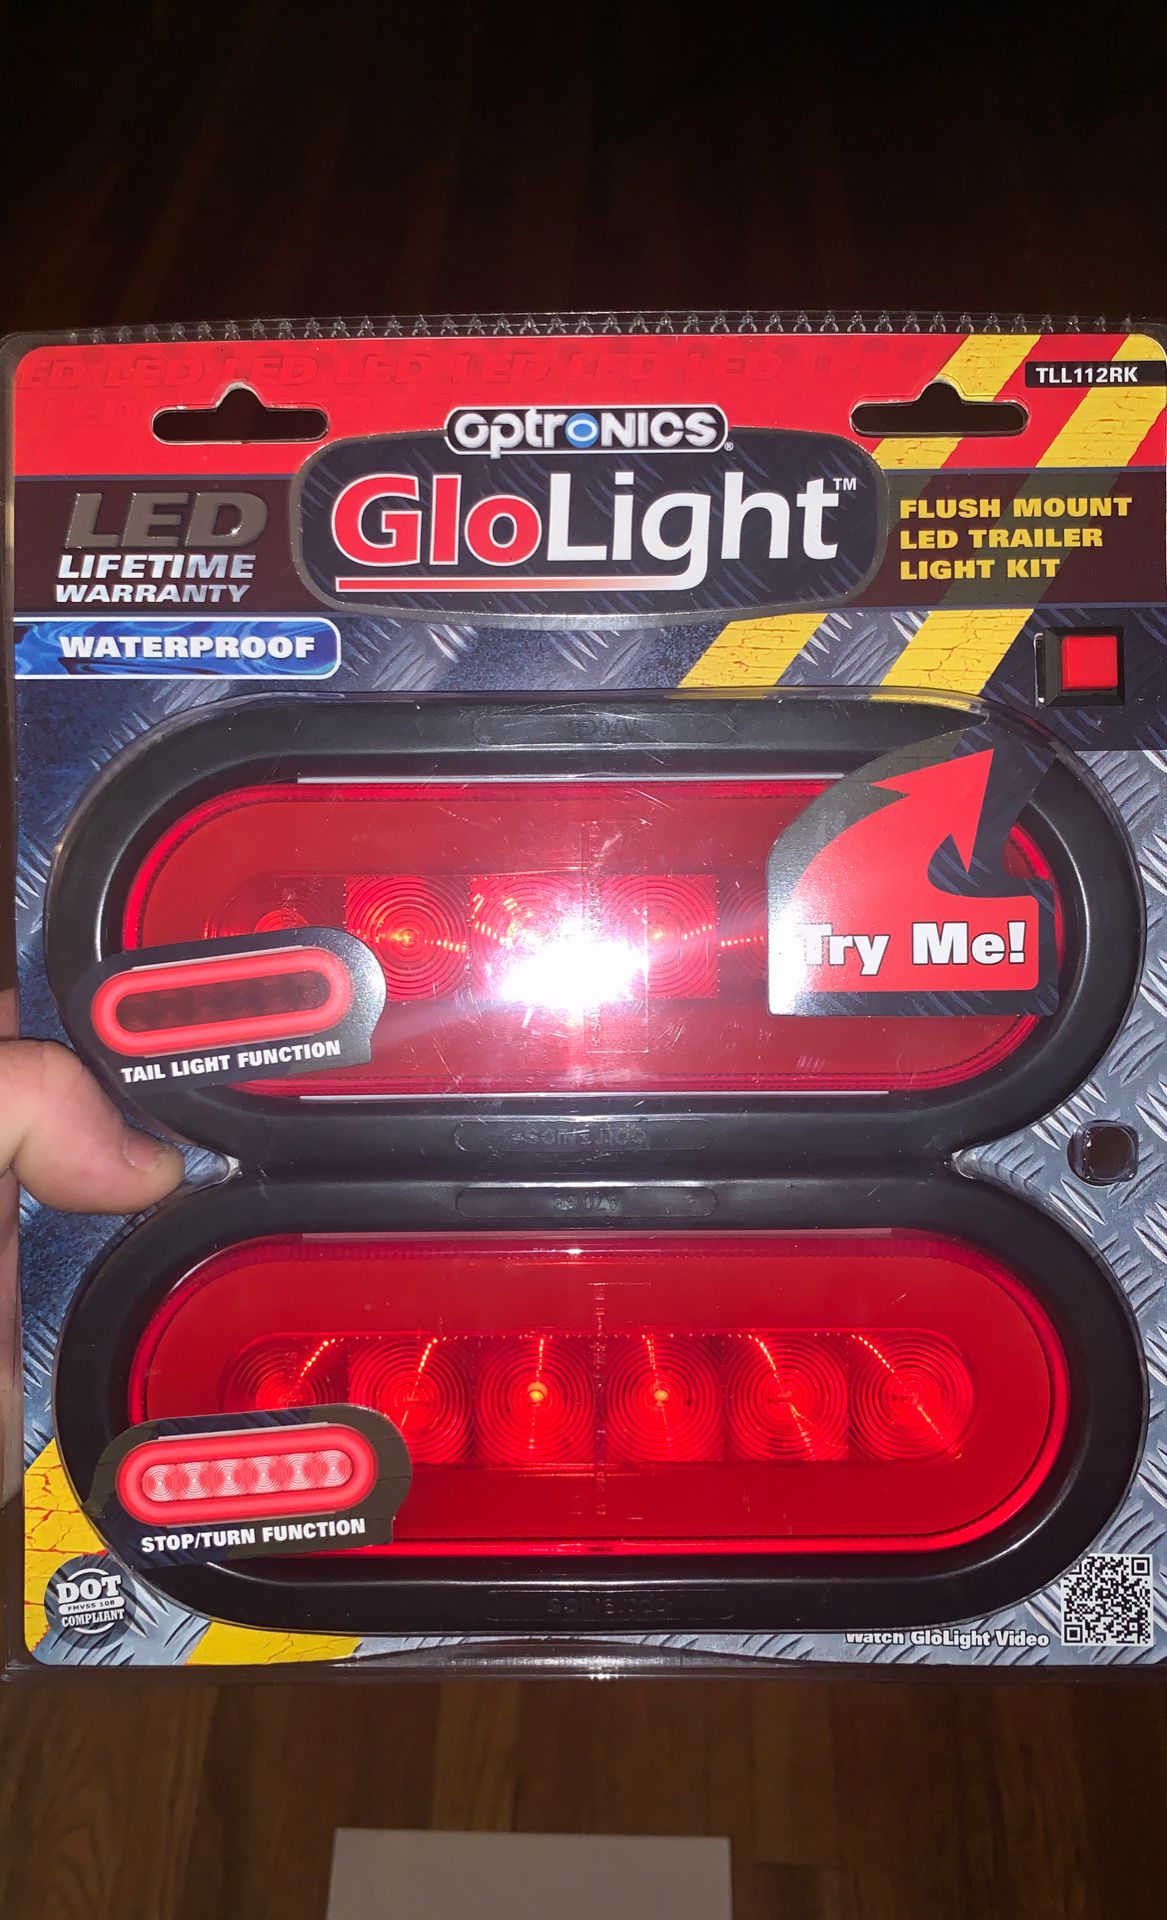 GLO light for a trailer